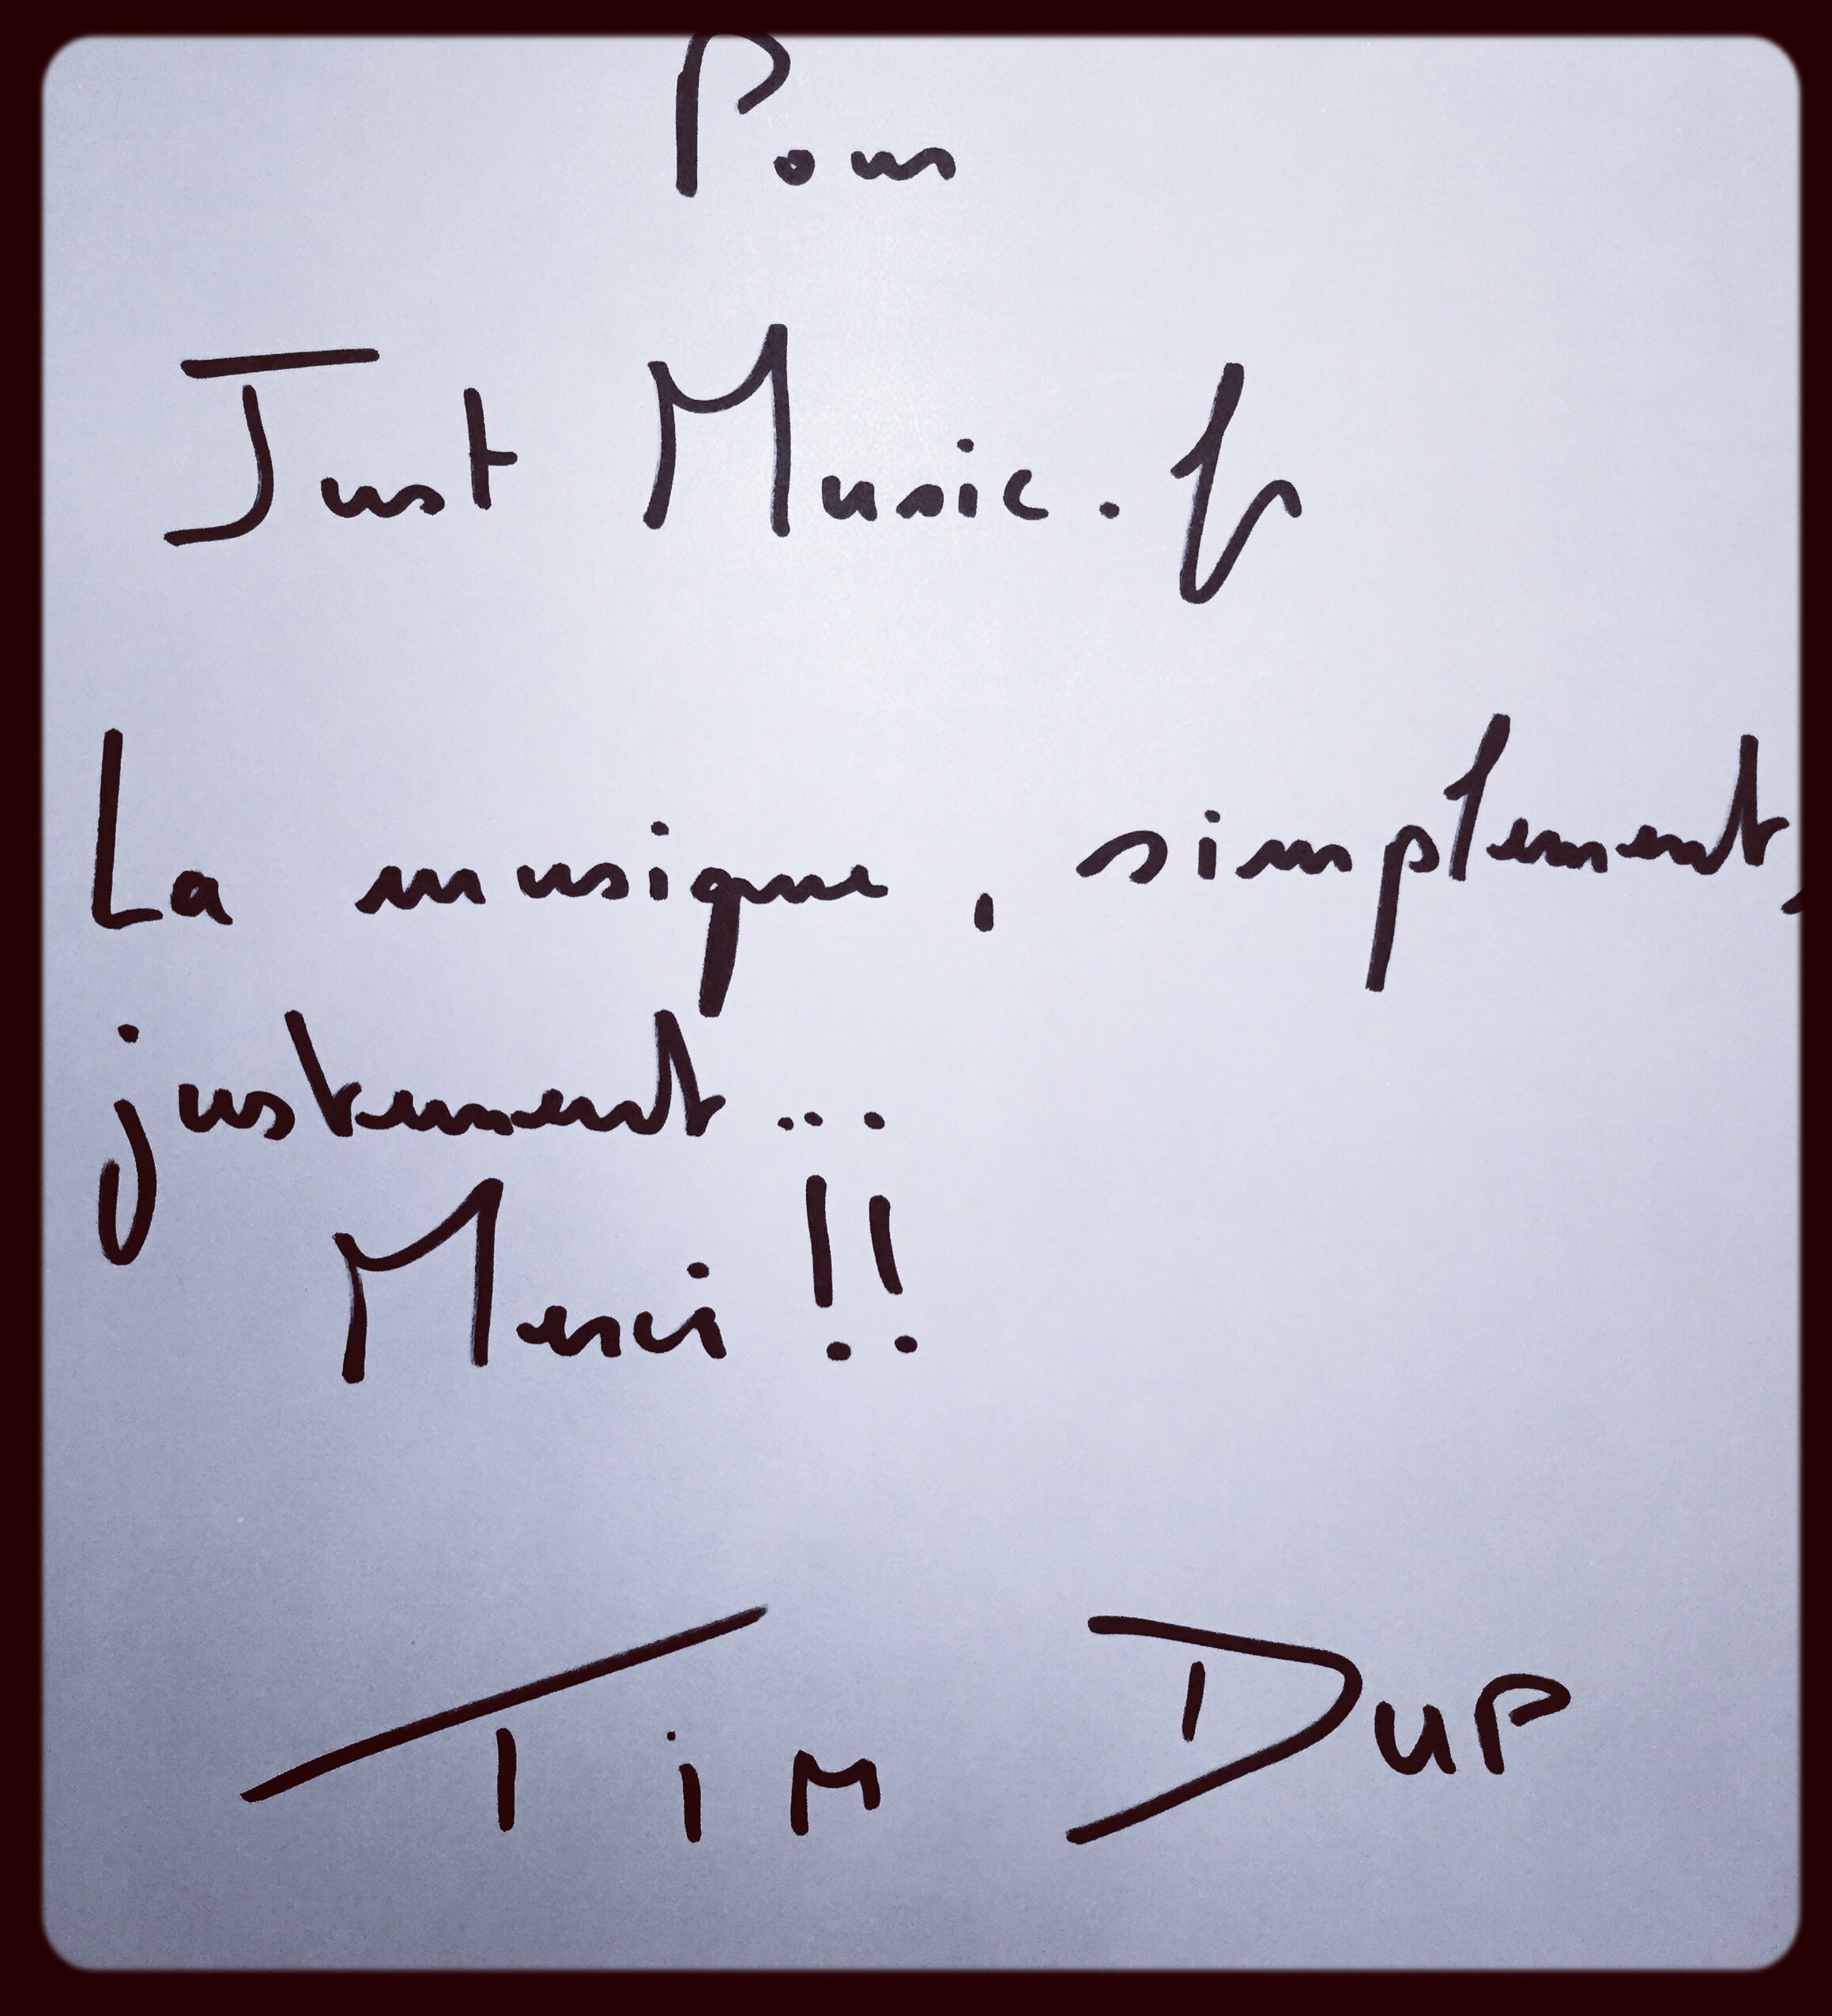 tim-dup-justmusic-fr-dedicace